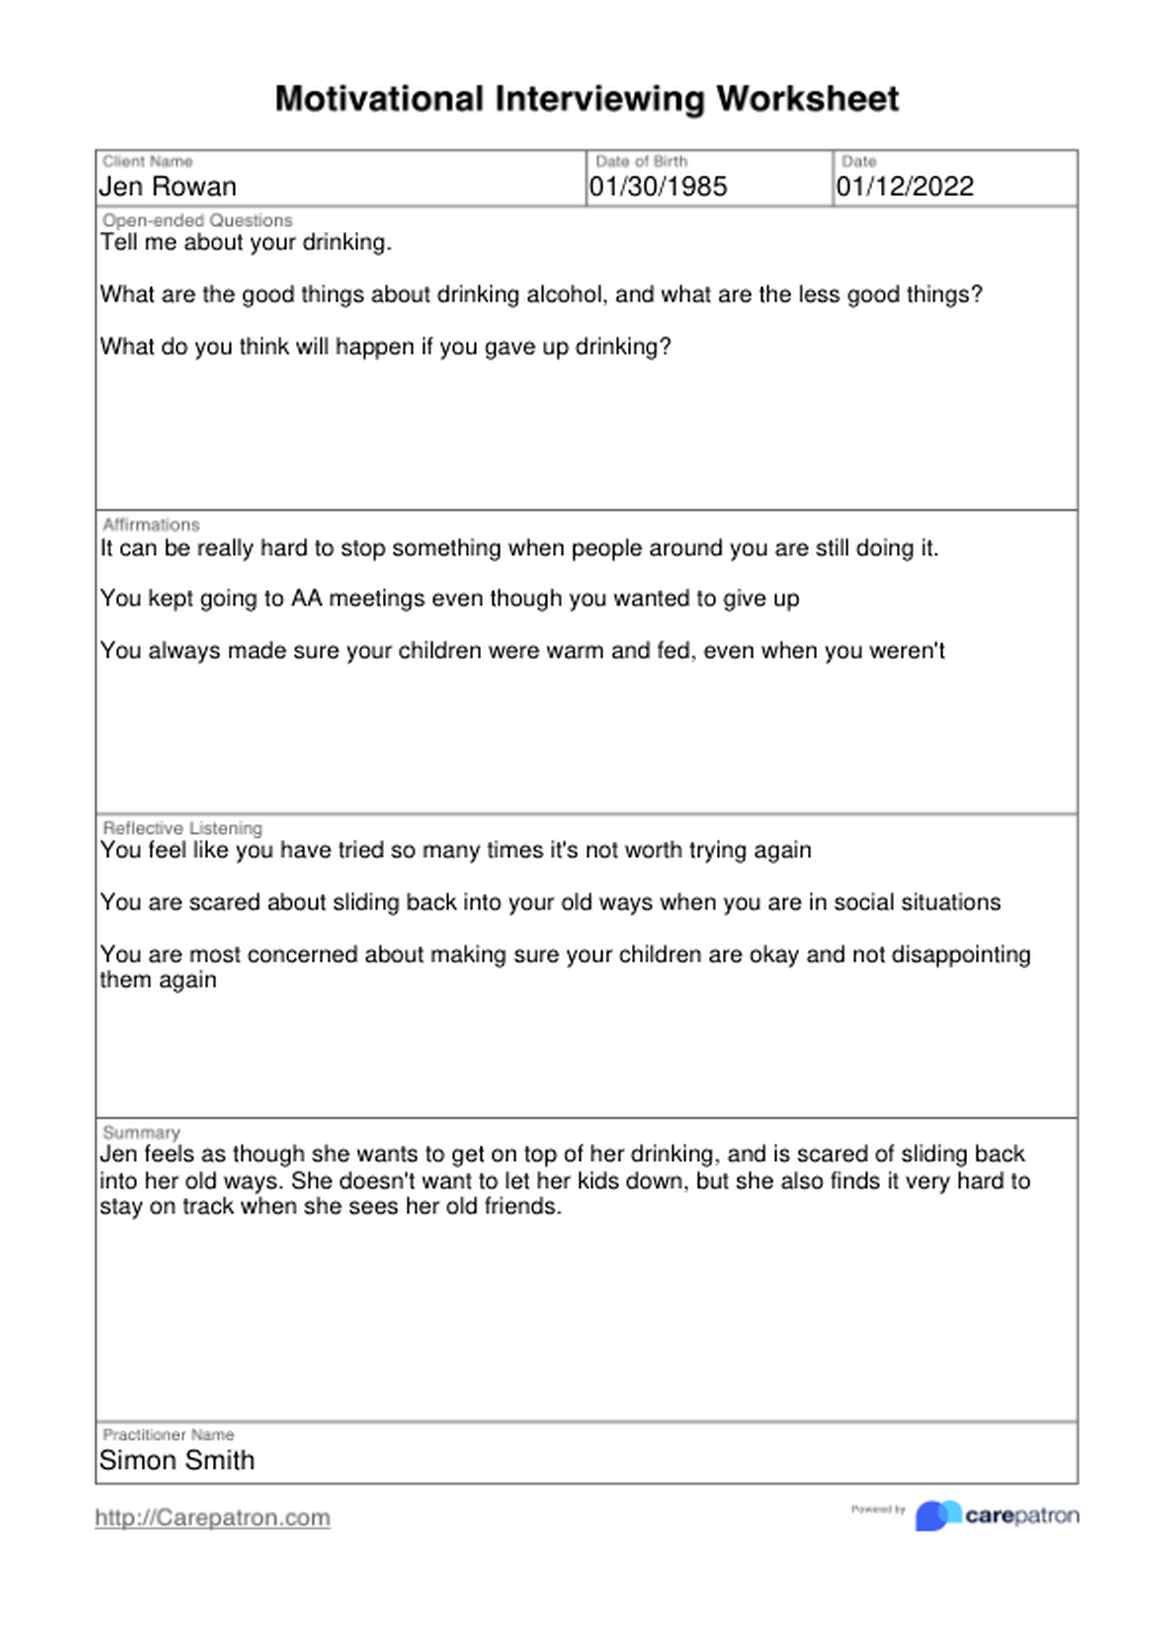 Motivational Interviewing Worksheet PDF Example